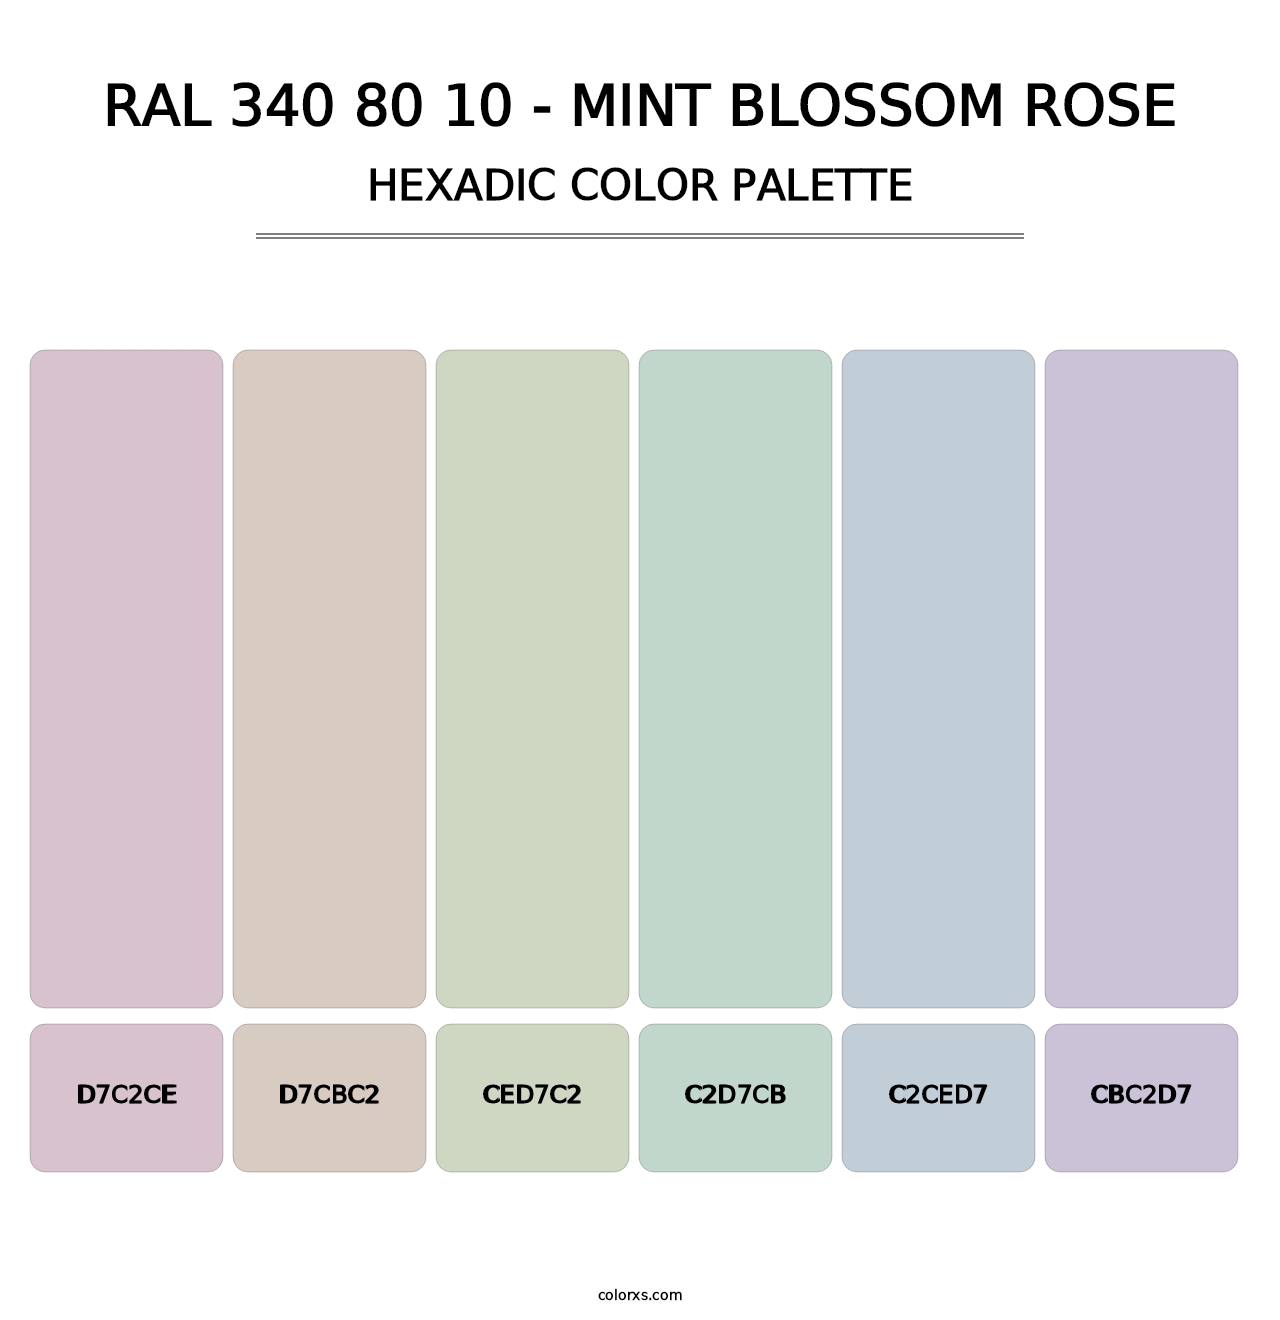 RAL 340 80 10 - Mint Blossom Rose - Hexadic Color Palette